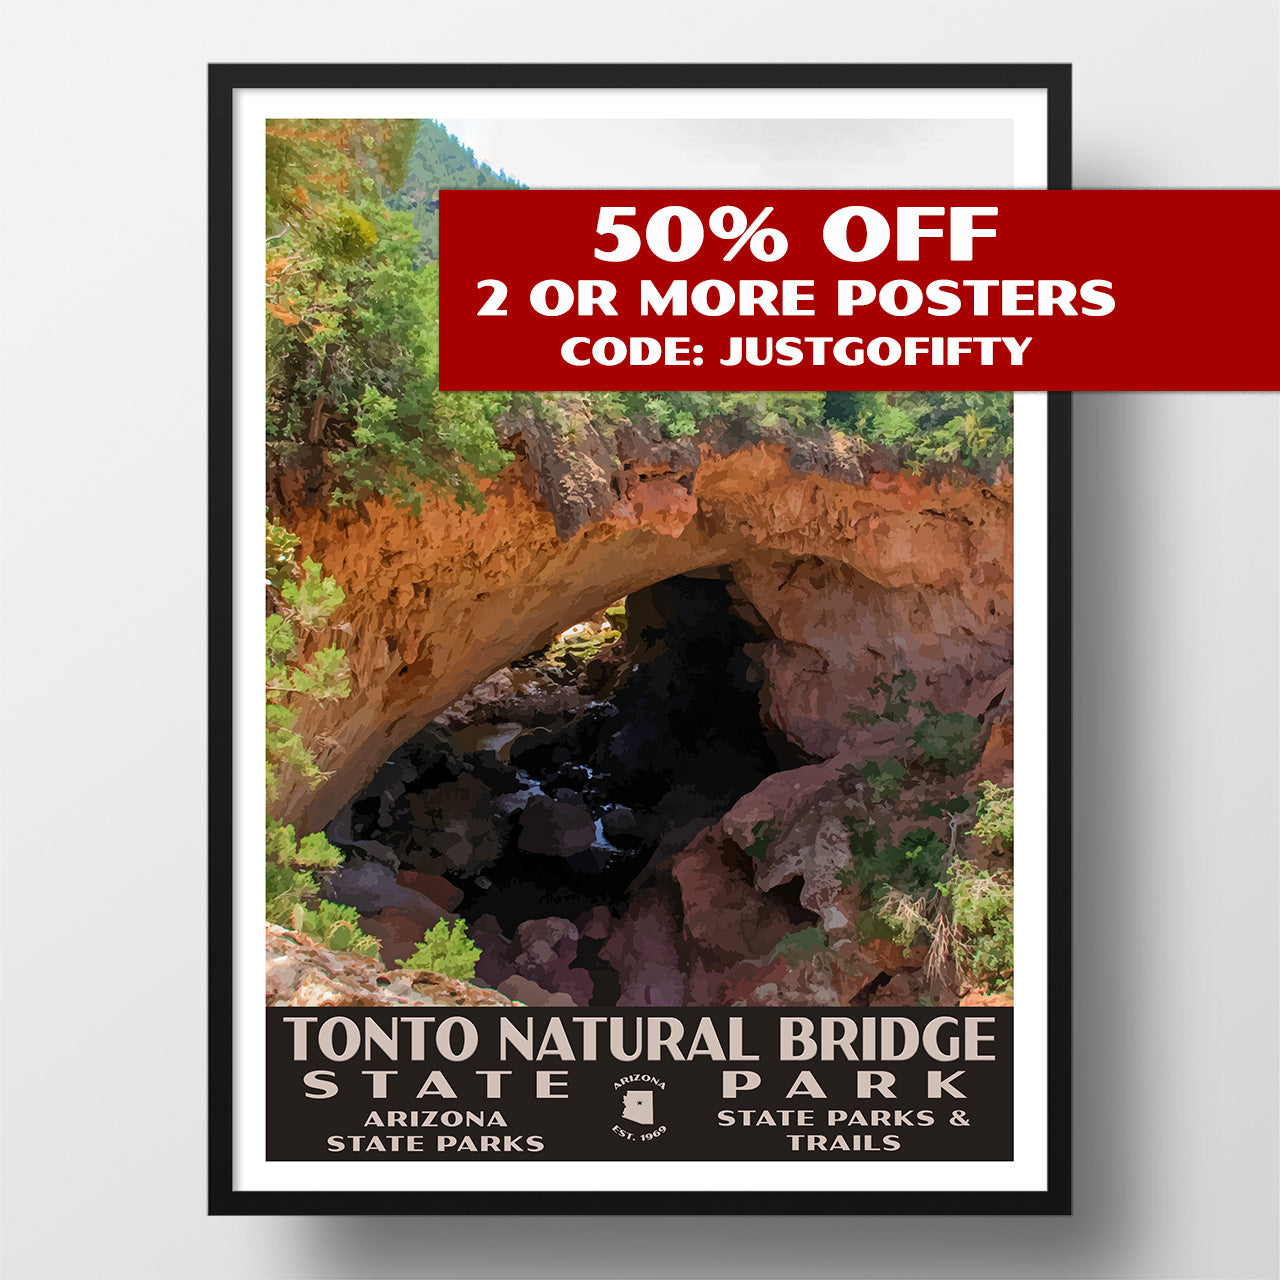 Tonto Natural Bridge State Park poster